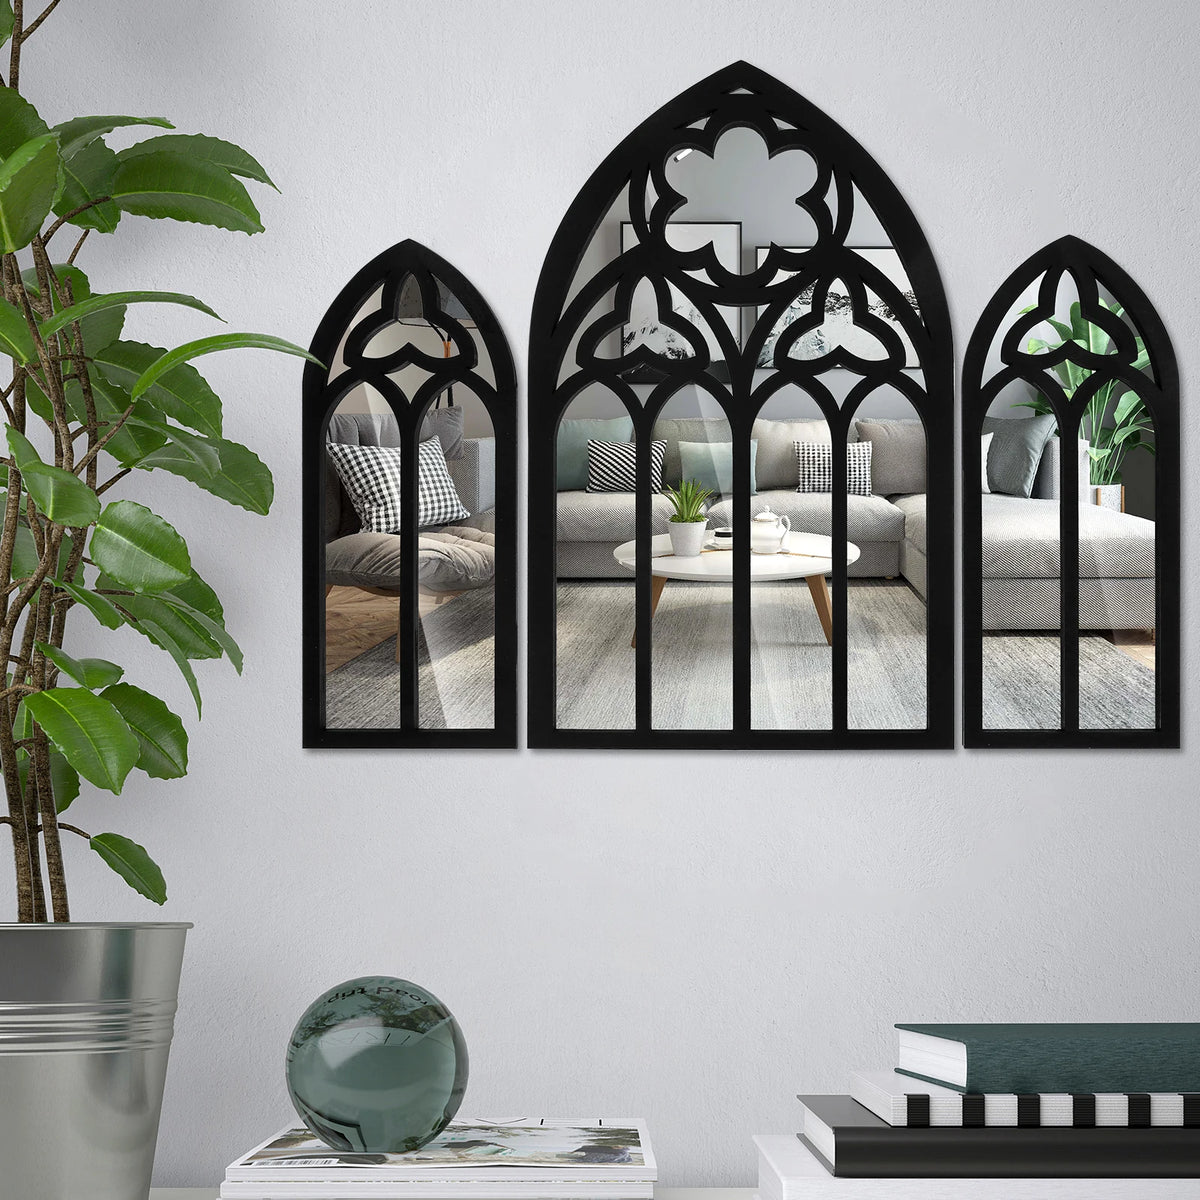 3Pcs Gothic Wall Arch Mirror Set